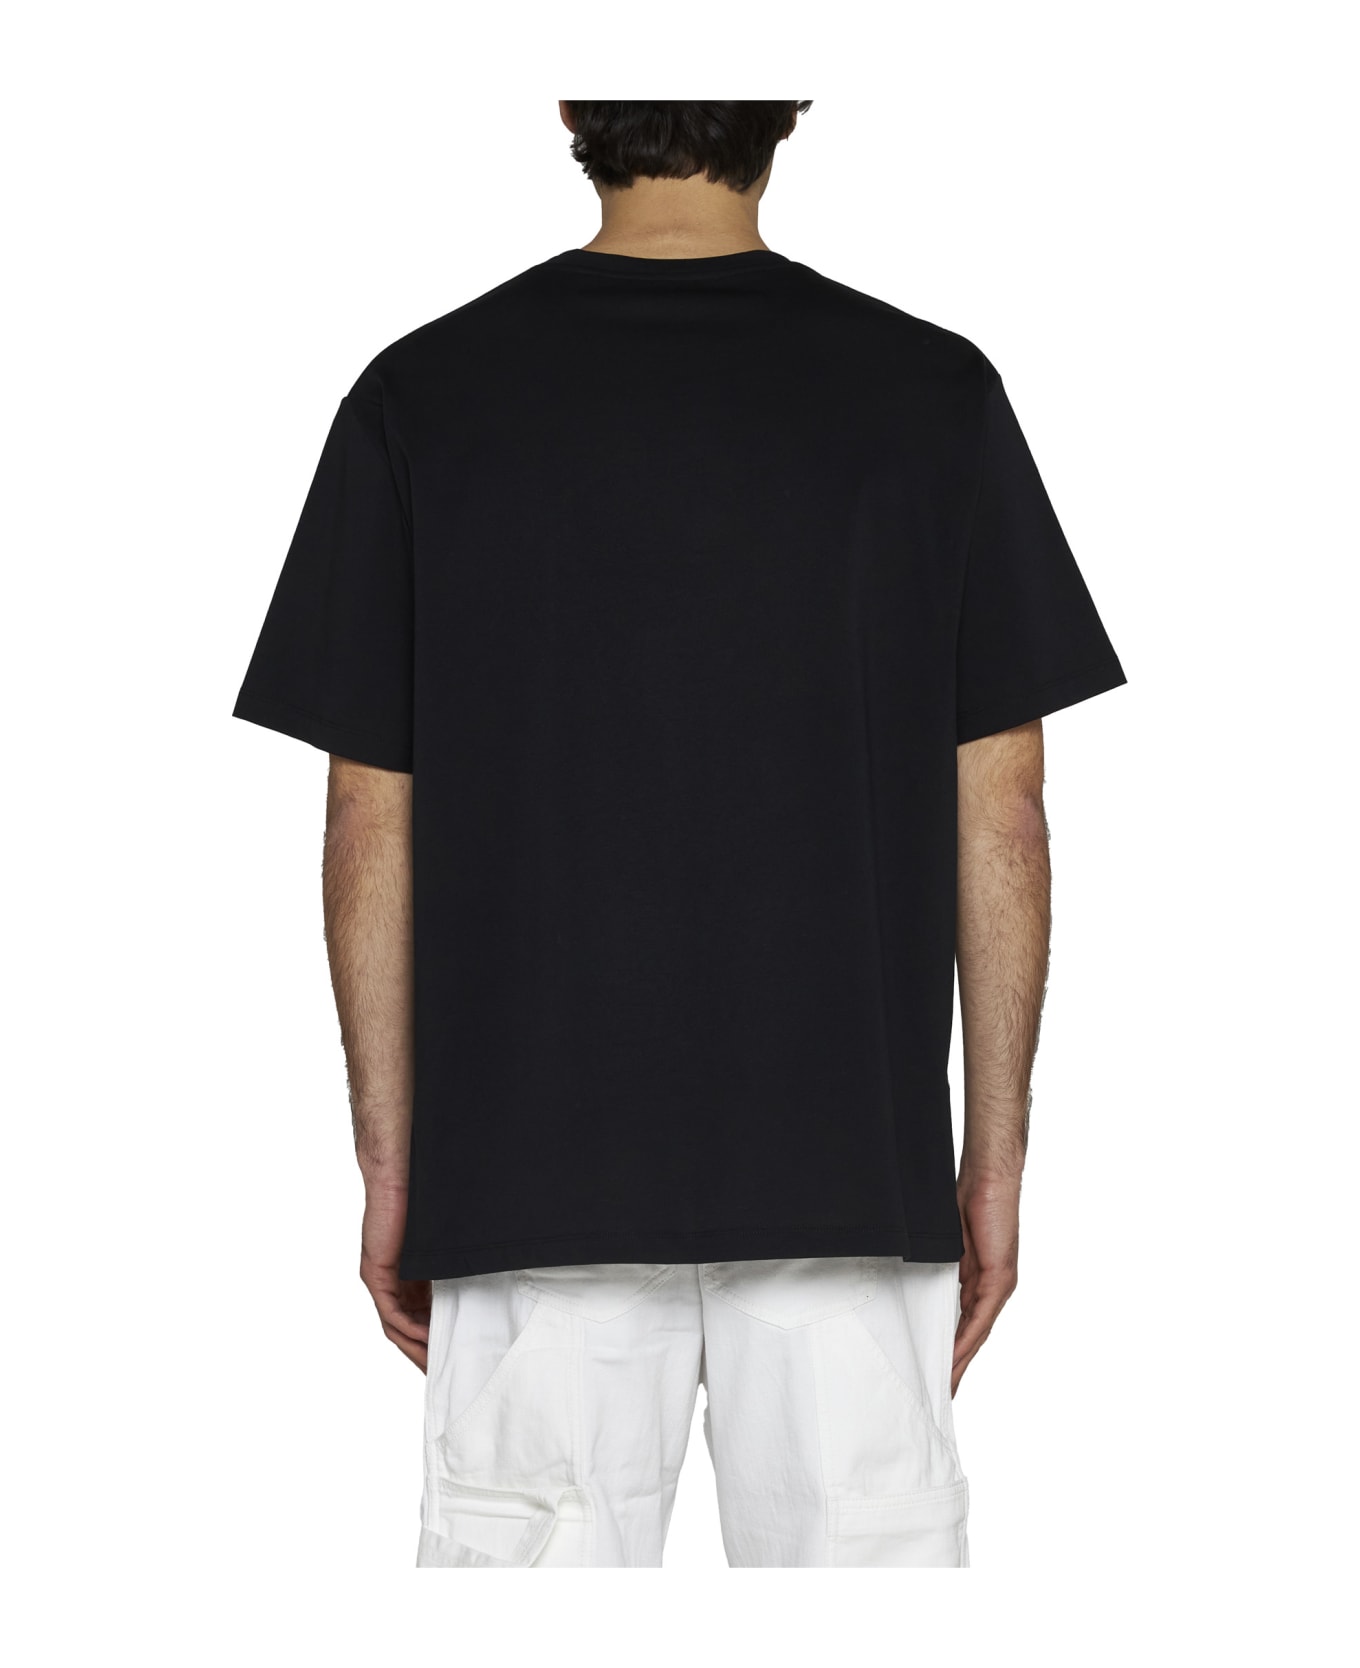 Balmain Printed T-shirt - Black